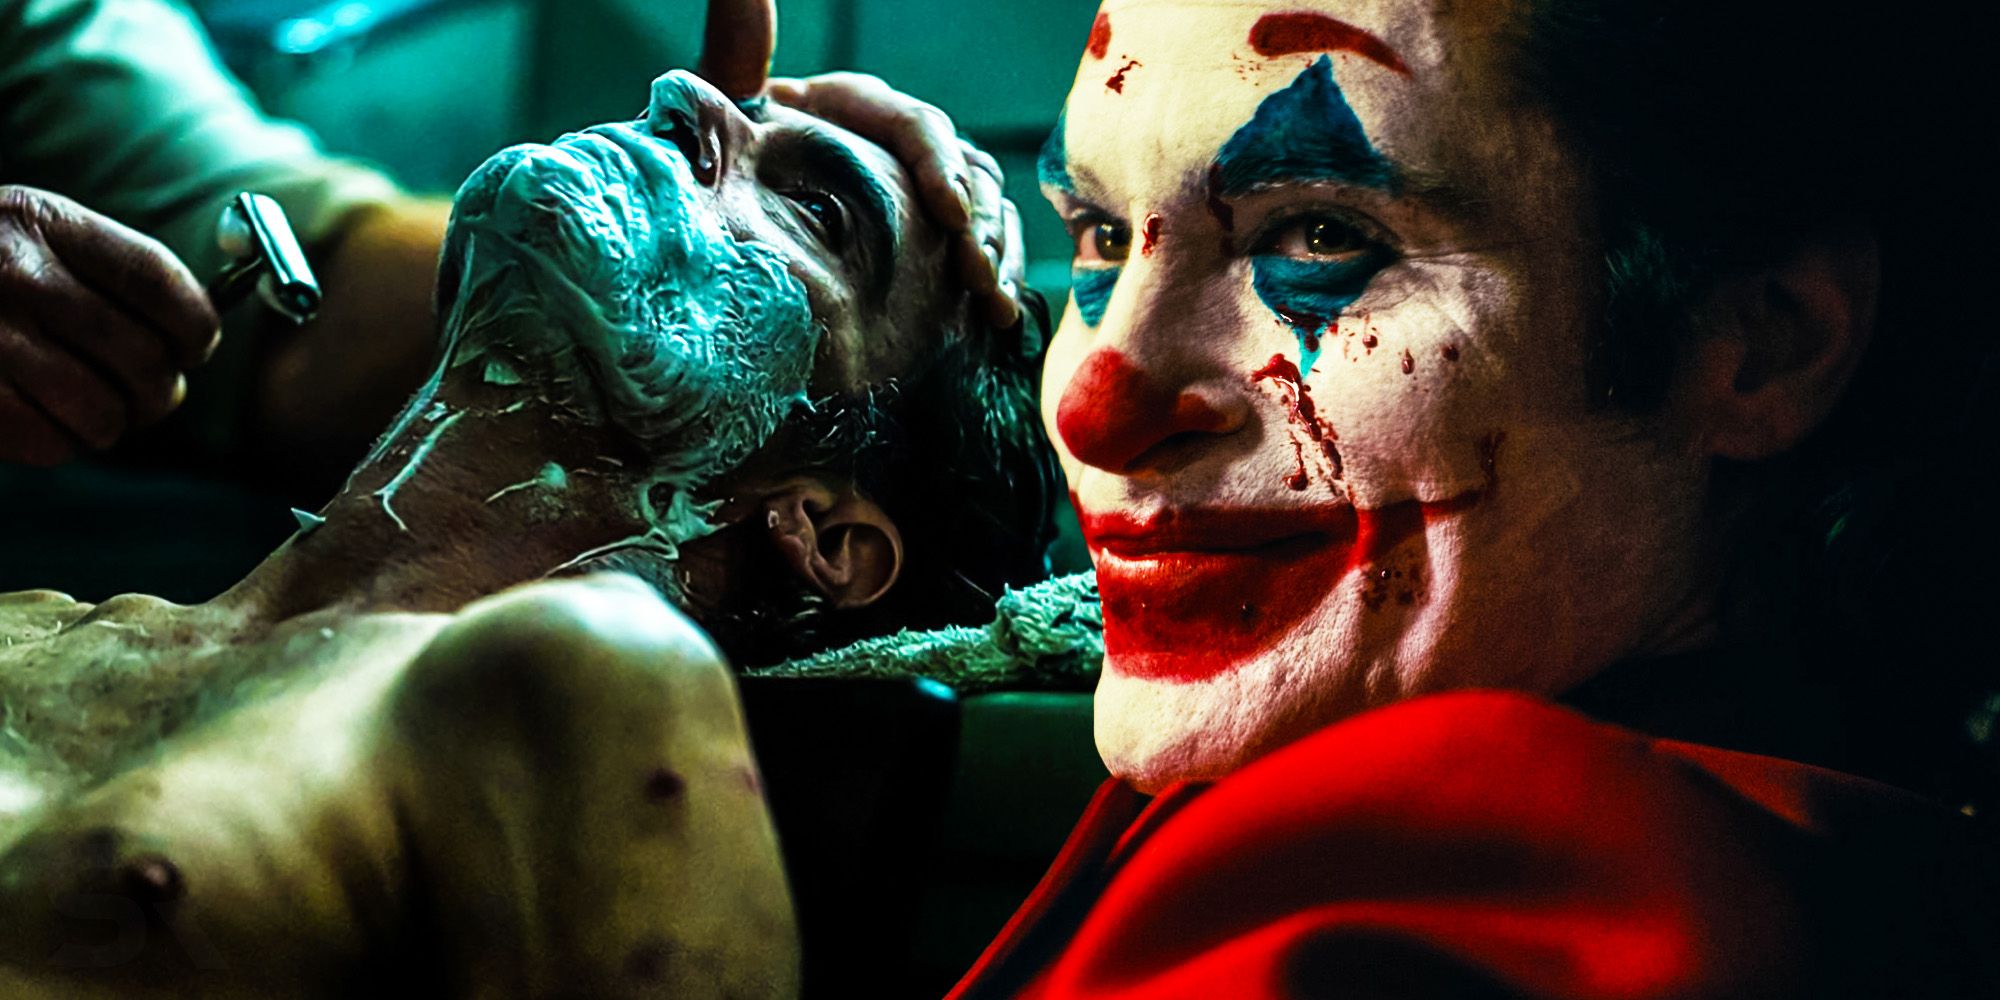 Joker 2’s Massive Budget Is A Major Gamble Despite Original bn Box Office Success